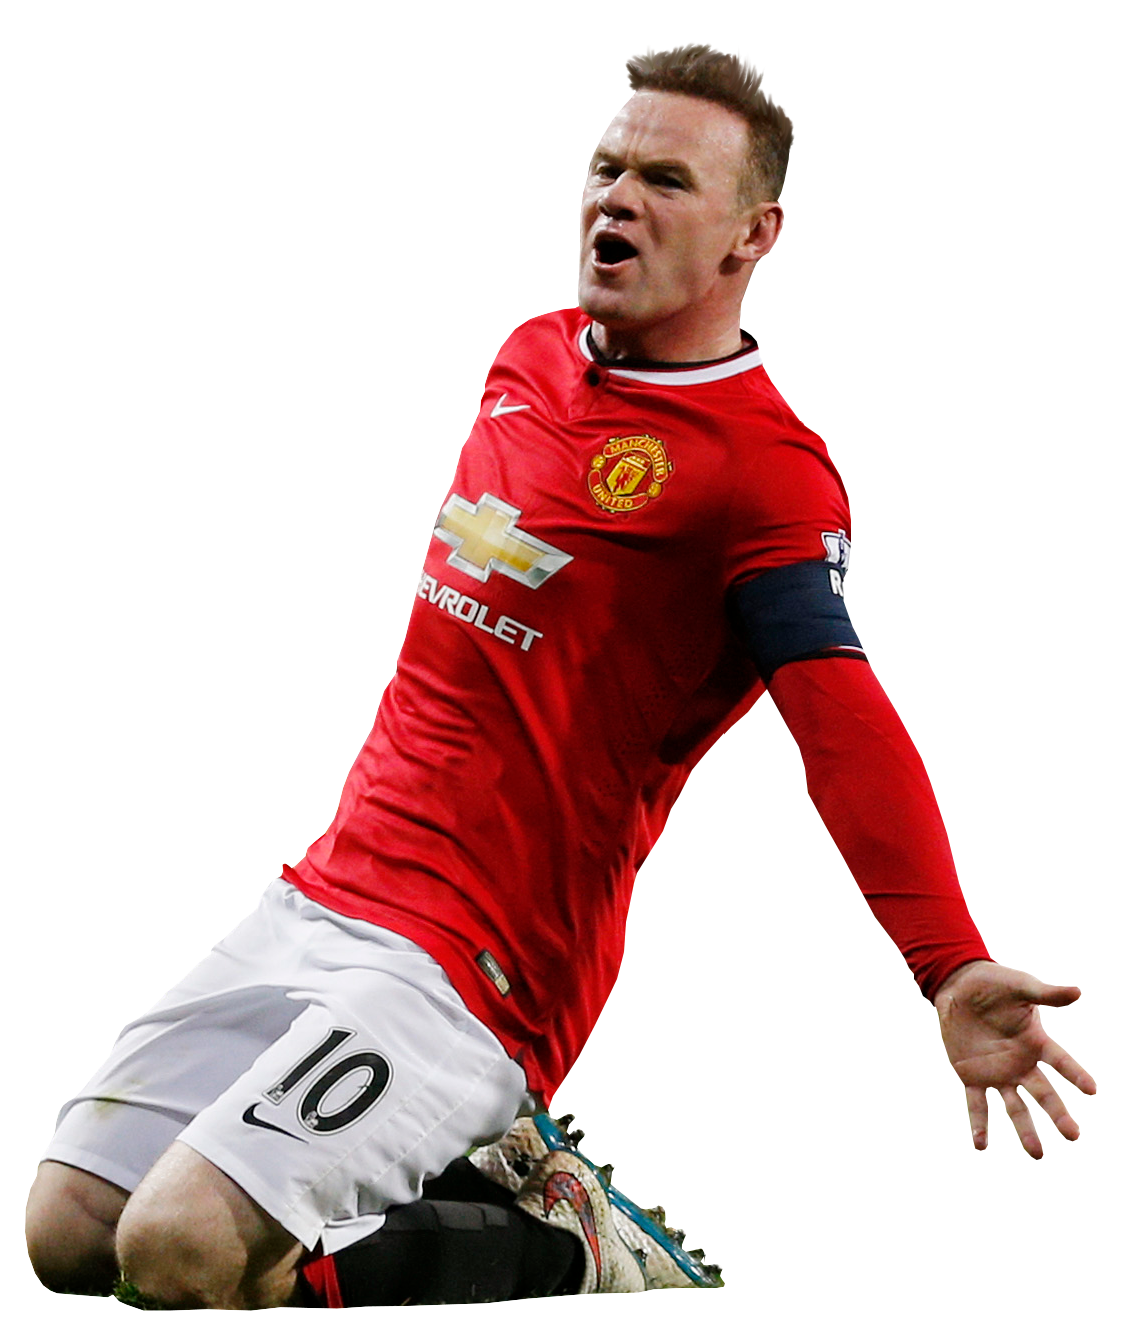 Man Utd Europa League Rooney wayne fifa trafford pnghut footyrenders
ronaldo